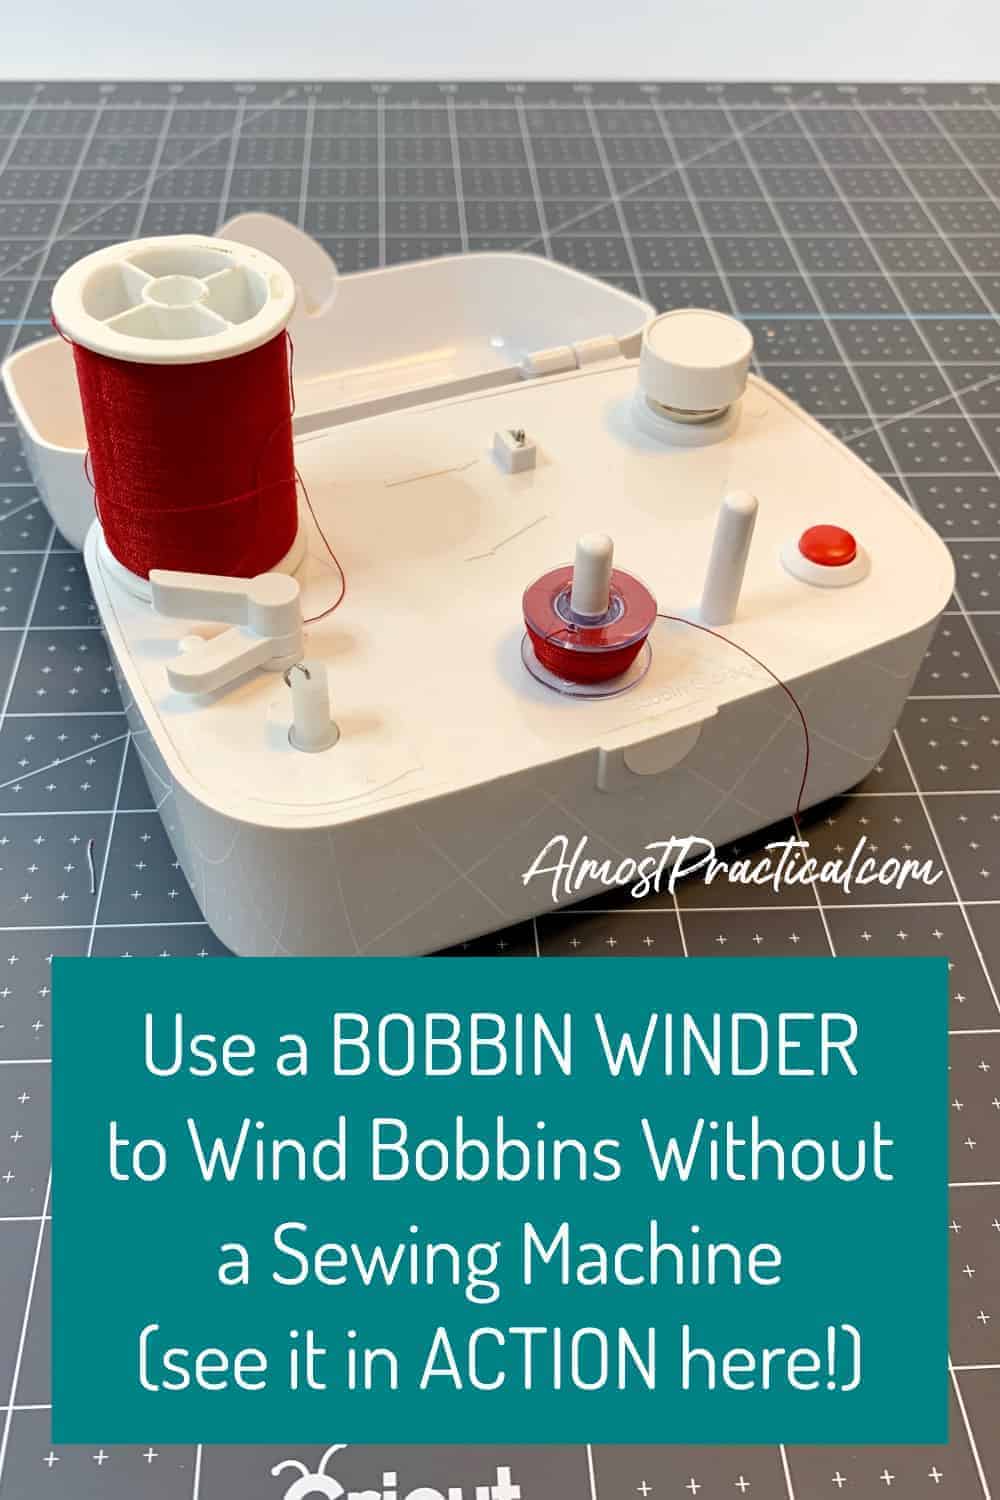 bobbin winder with red thread spool on a Cricut cutting mat